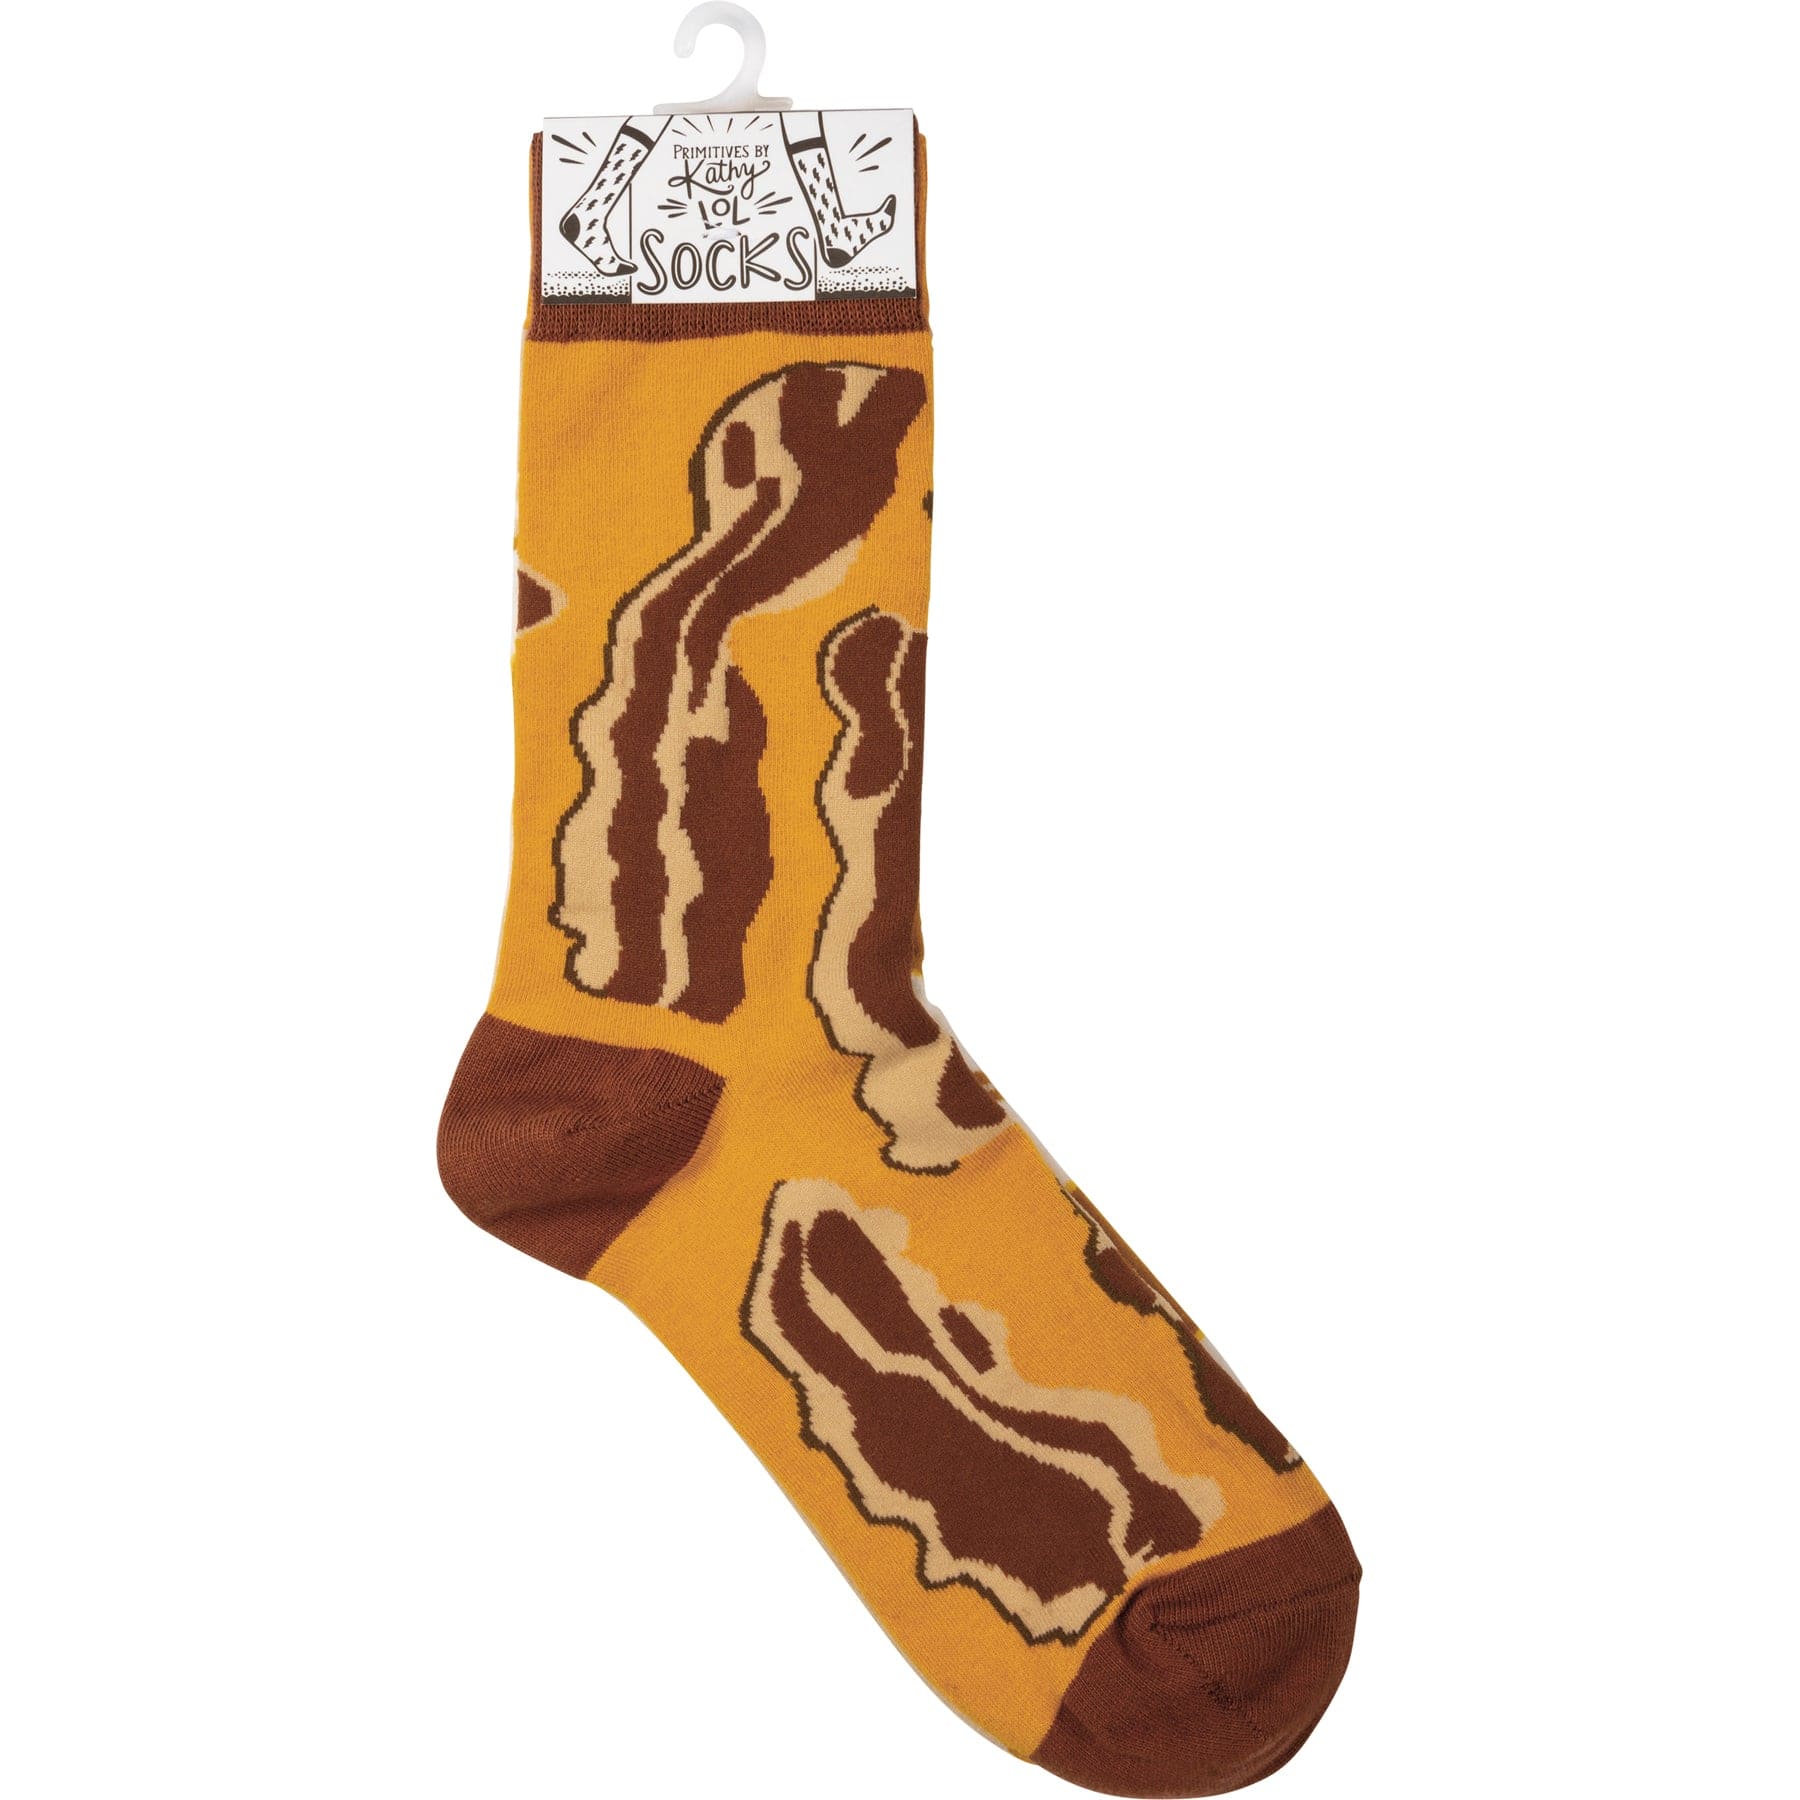 Socks One Size Fits Most Socks - Bacon & Eggs PBK-1107880